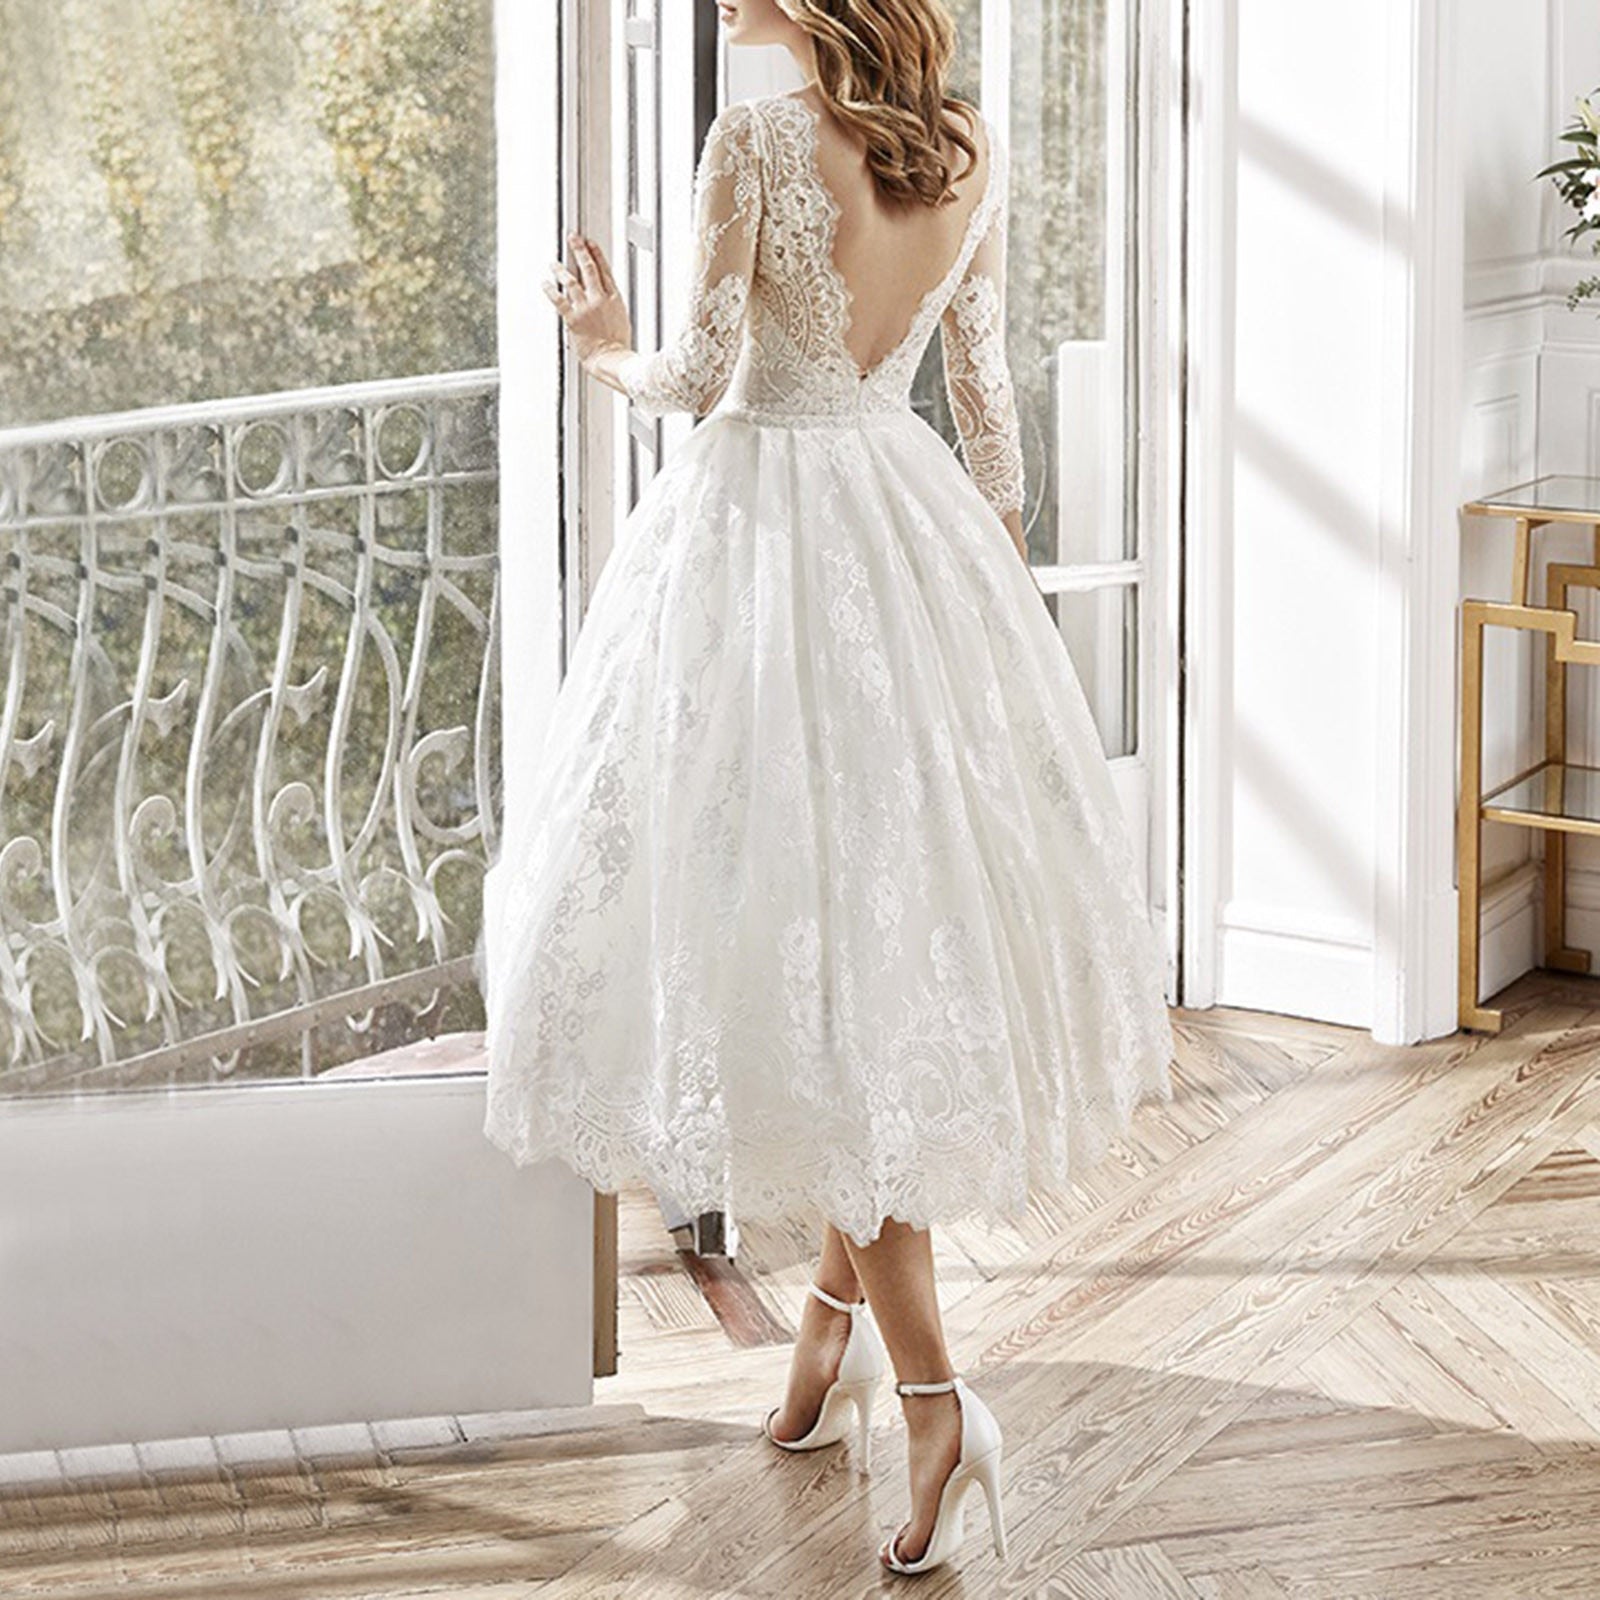 HOOR Elegant White Lace Dress